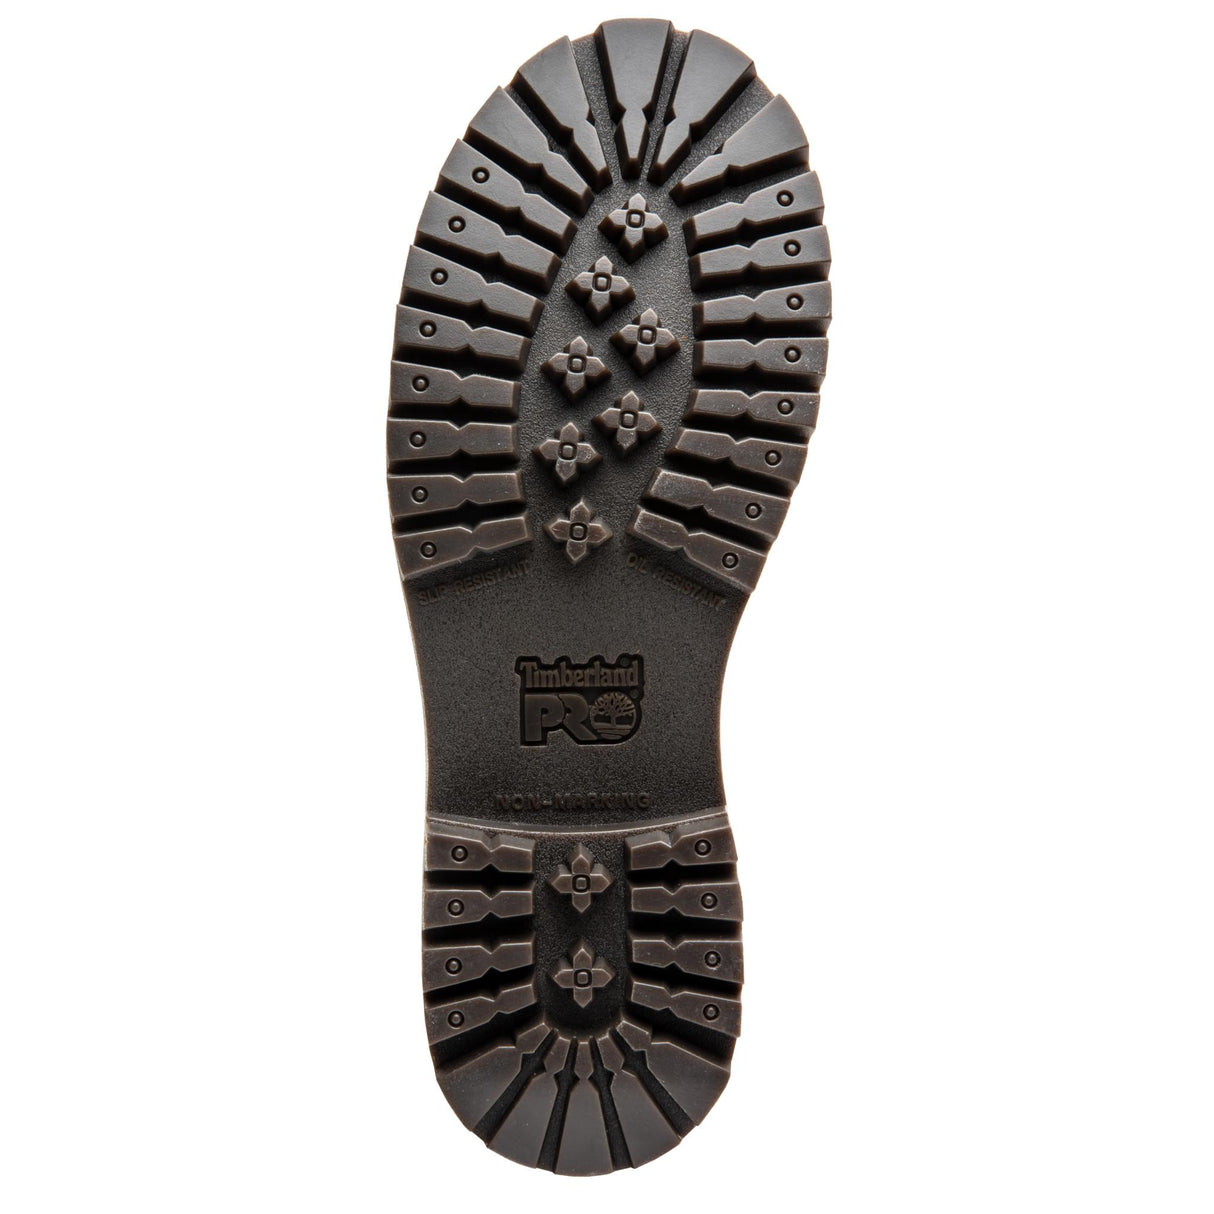 Direct Attach 6" Women's Steel-Toe Boot Waterproof Brown